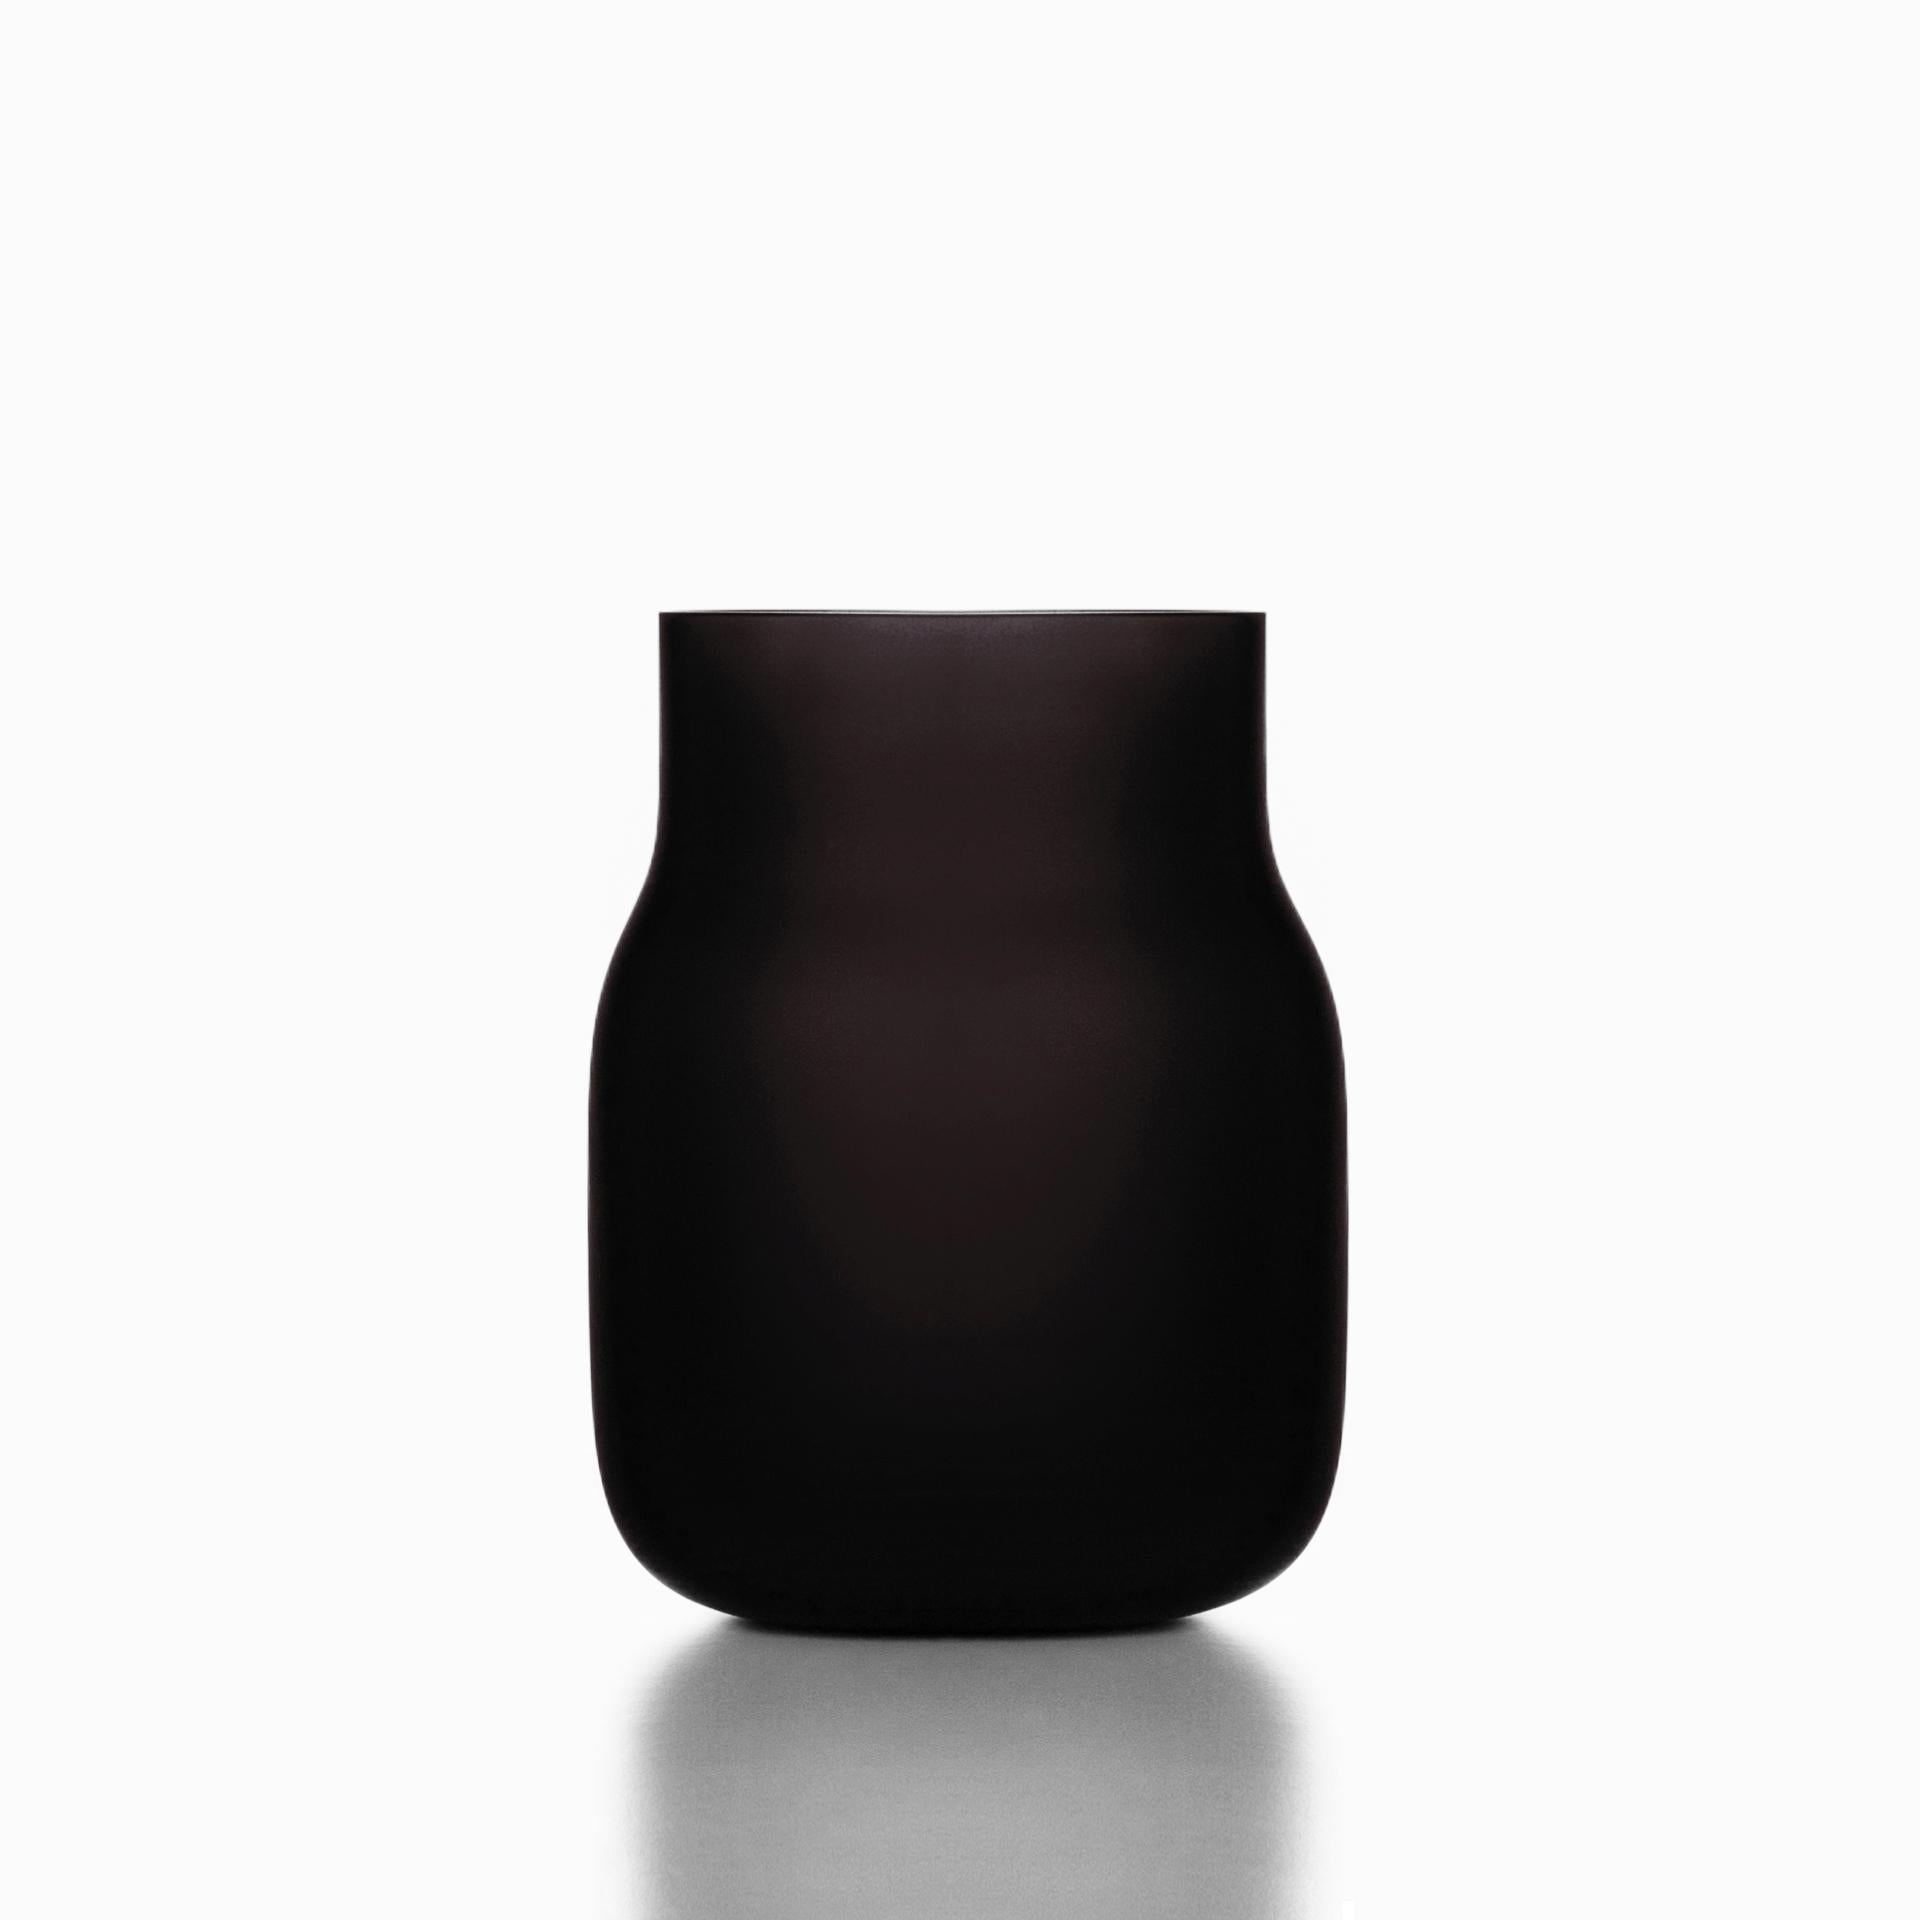 Big black Bandaska matte vase by Dechem Studio.
Dimensions: D 18 x H 24 cm.
Materials: glass.
Available in 4 sizes: D15 x H25/ D18 x H24/ D9 x W31/ D22 x H33 cm.
Available in black, uranium yellow, dark blue.

Hand-blown into beech wood mold,